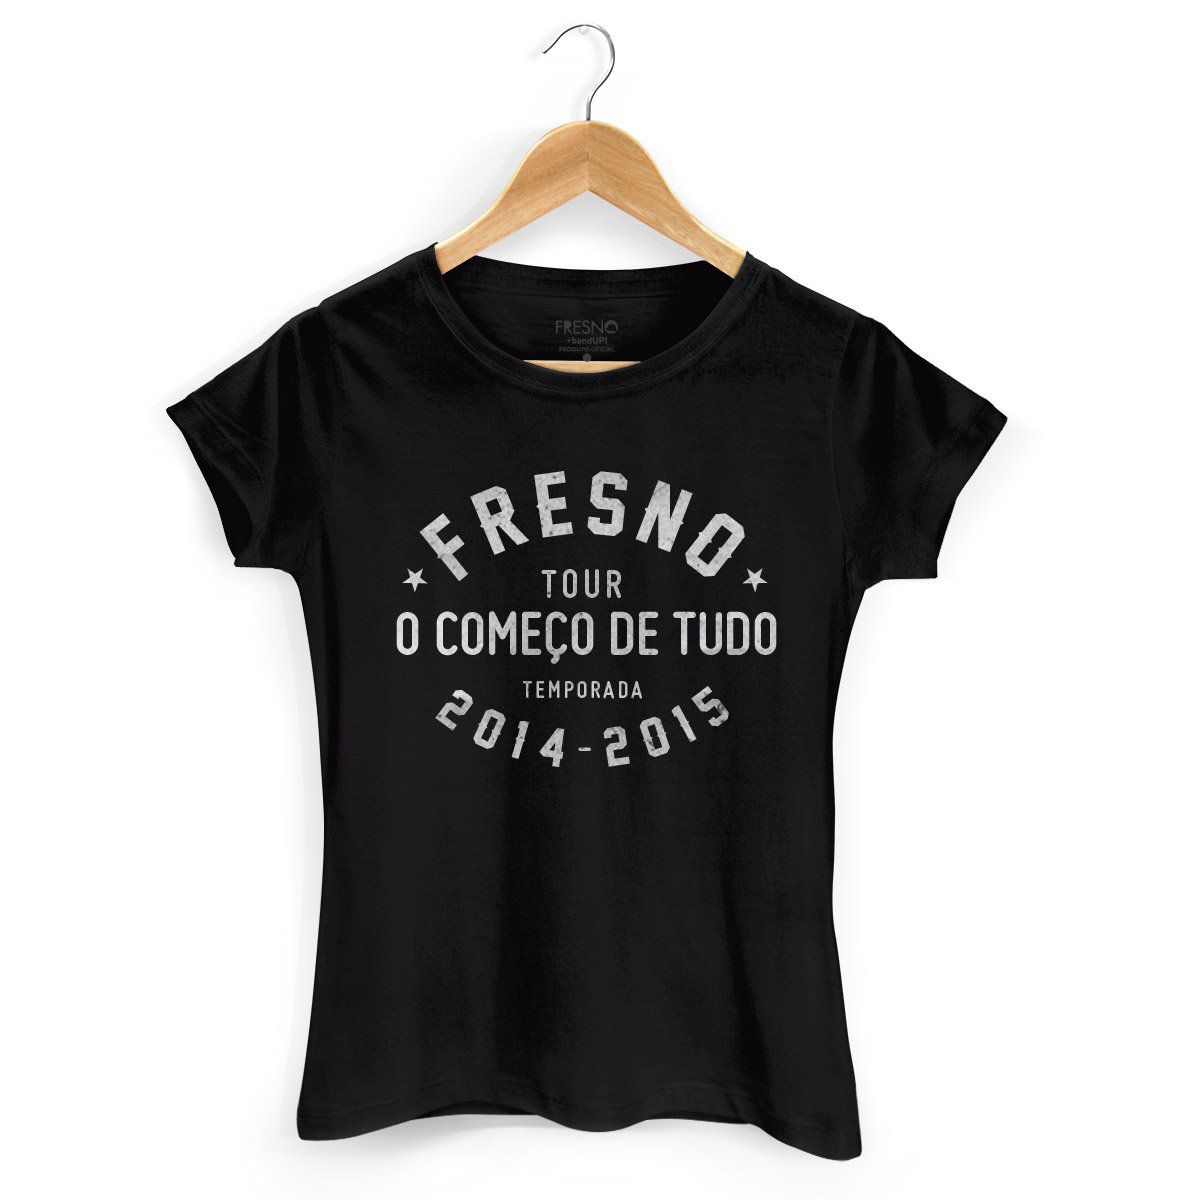 Camiseta Feminina Fresno Temporada 2014-2015